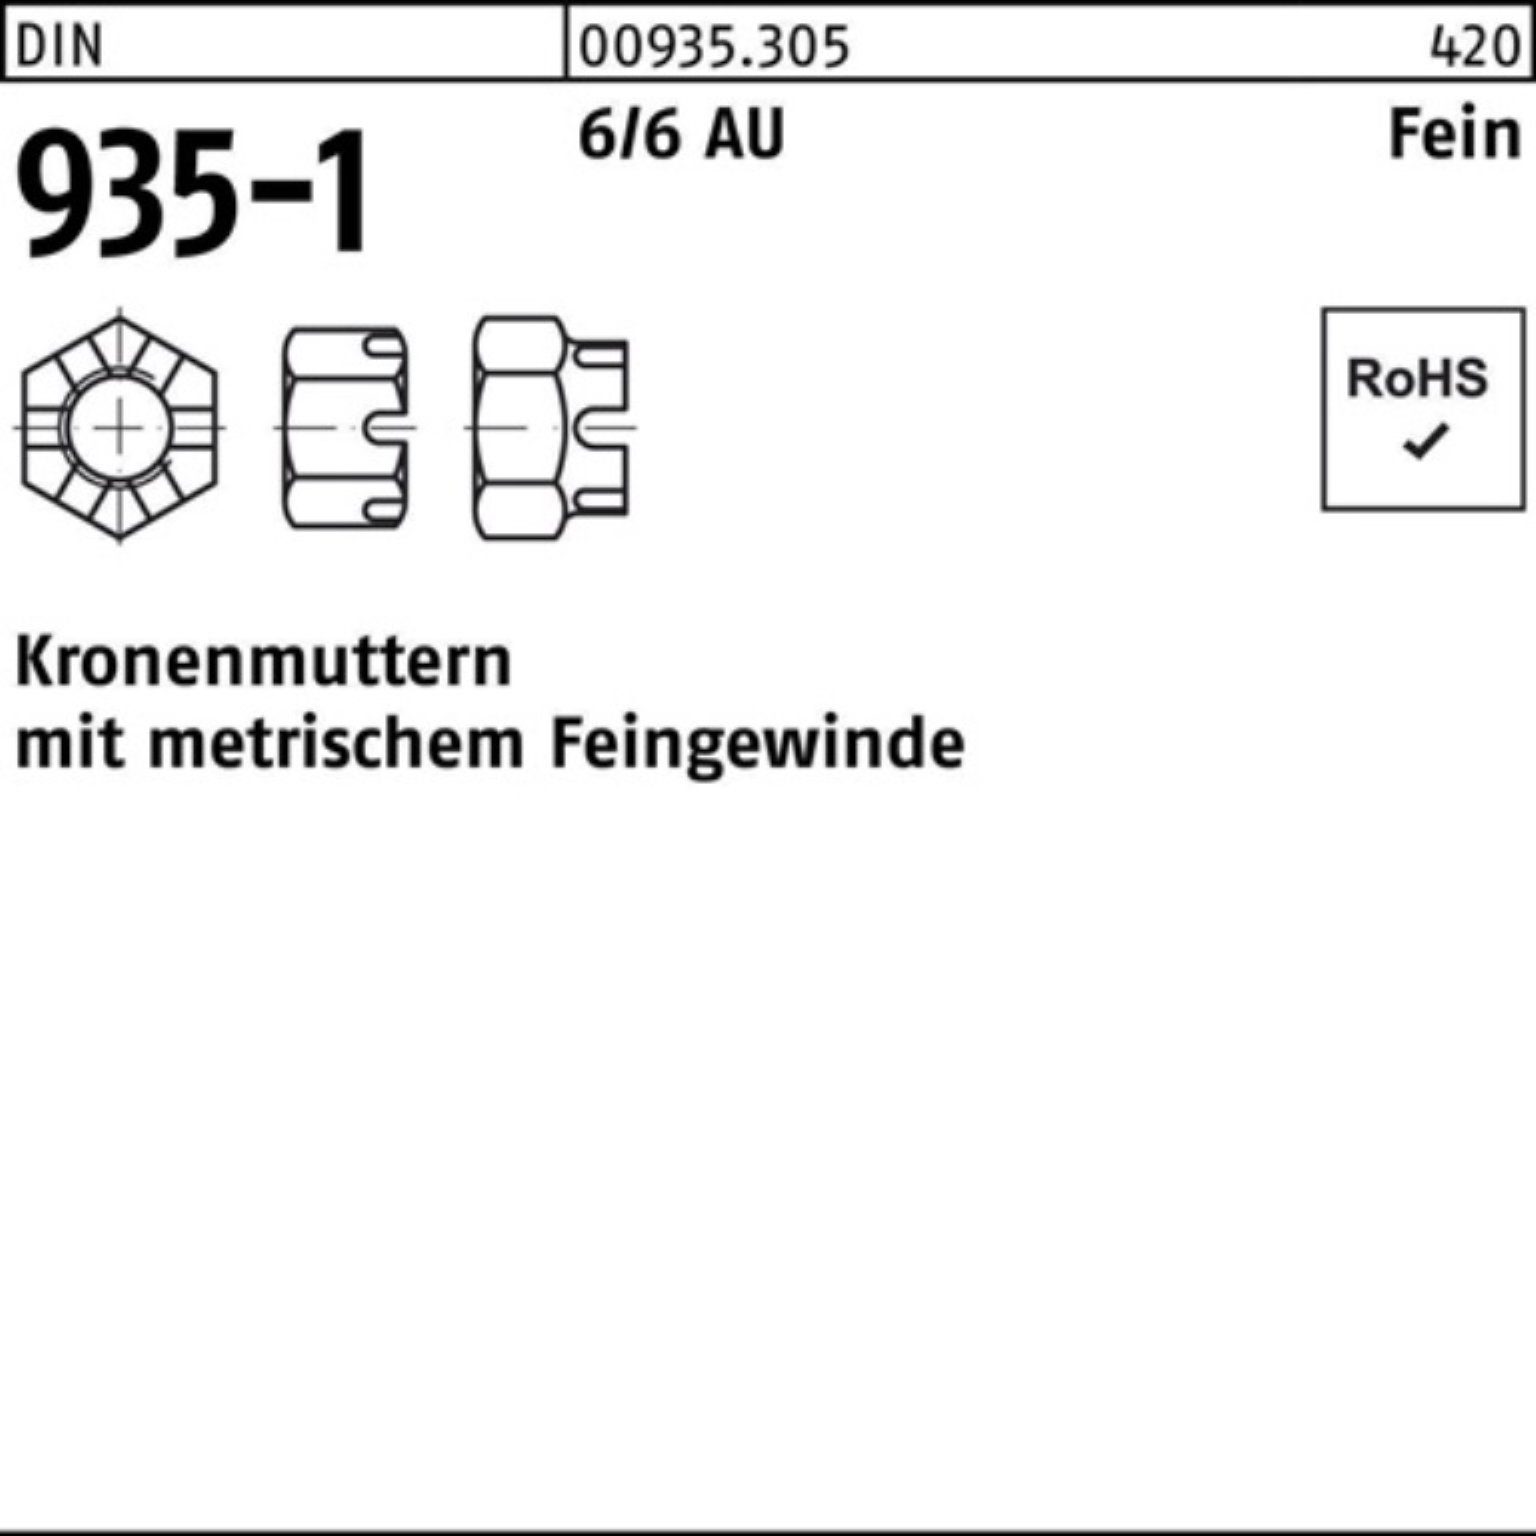 Reyher Kronenmutter 100er Pack Kronenmutter DIN 935-1 M36x 3 6 1 Stück DIN 935-1 6 Fein K